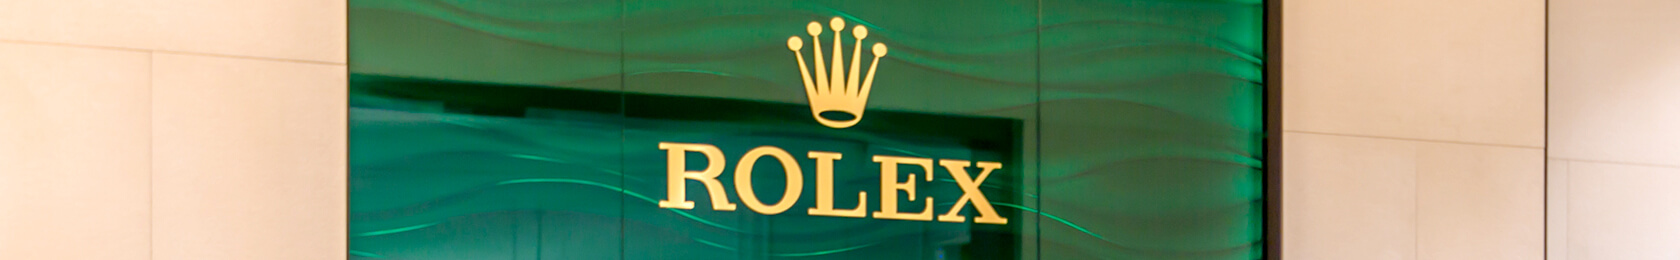 Kirk Jewelers Rolex Team in Miami Florida